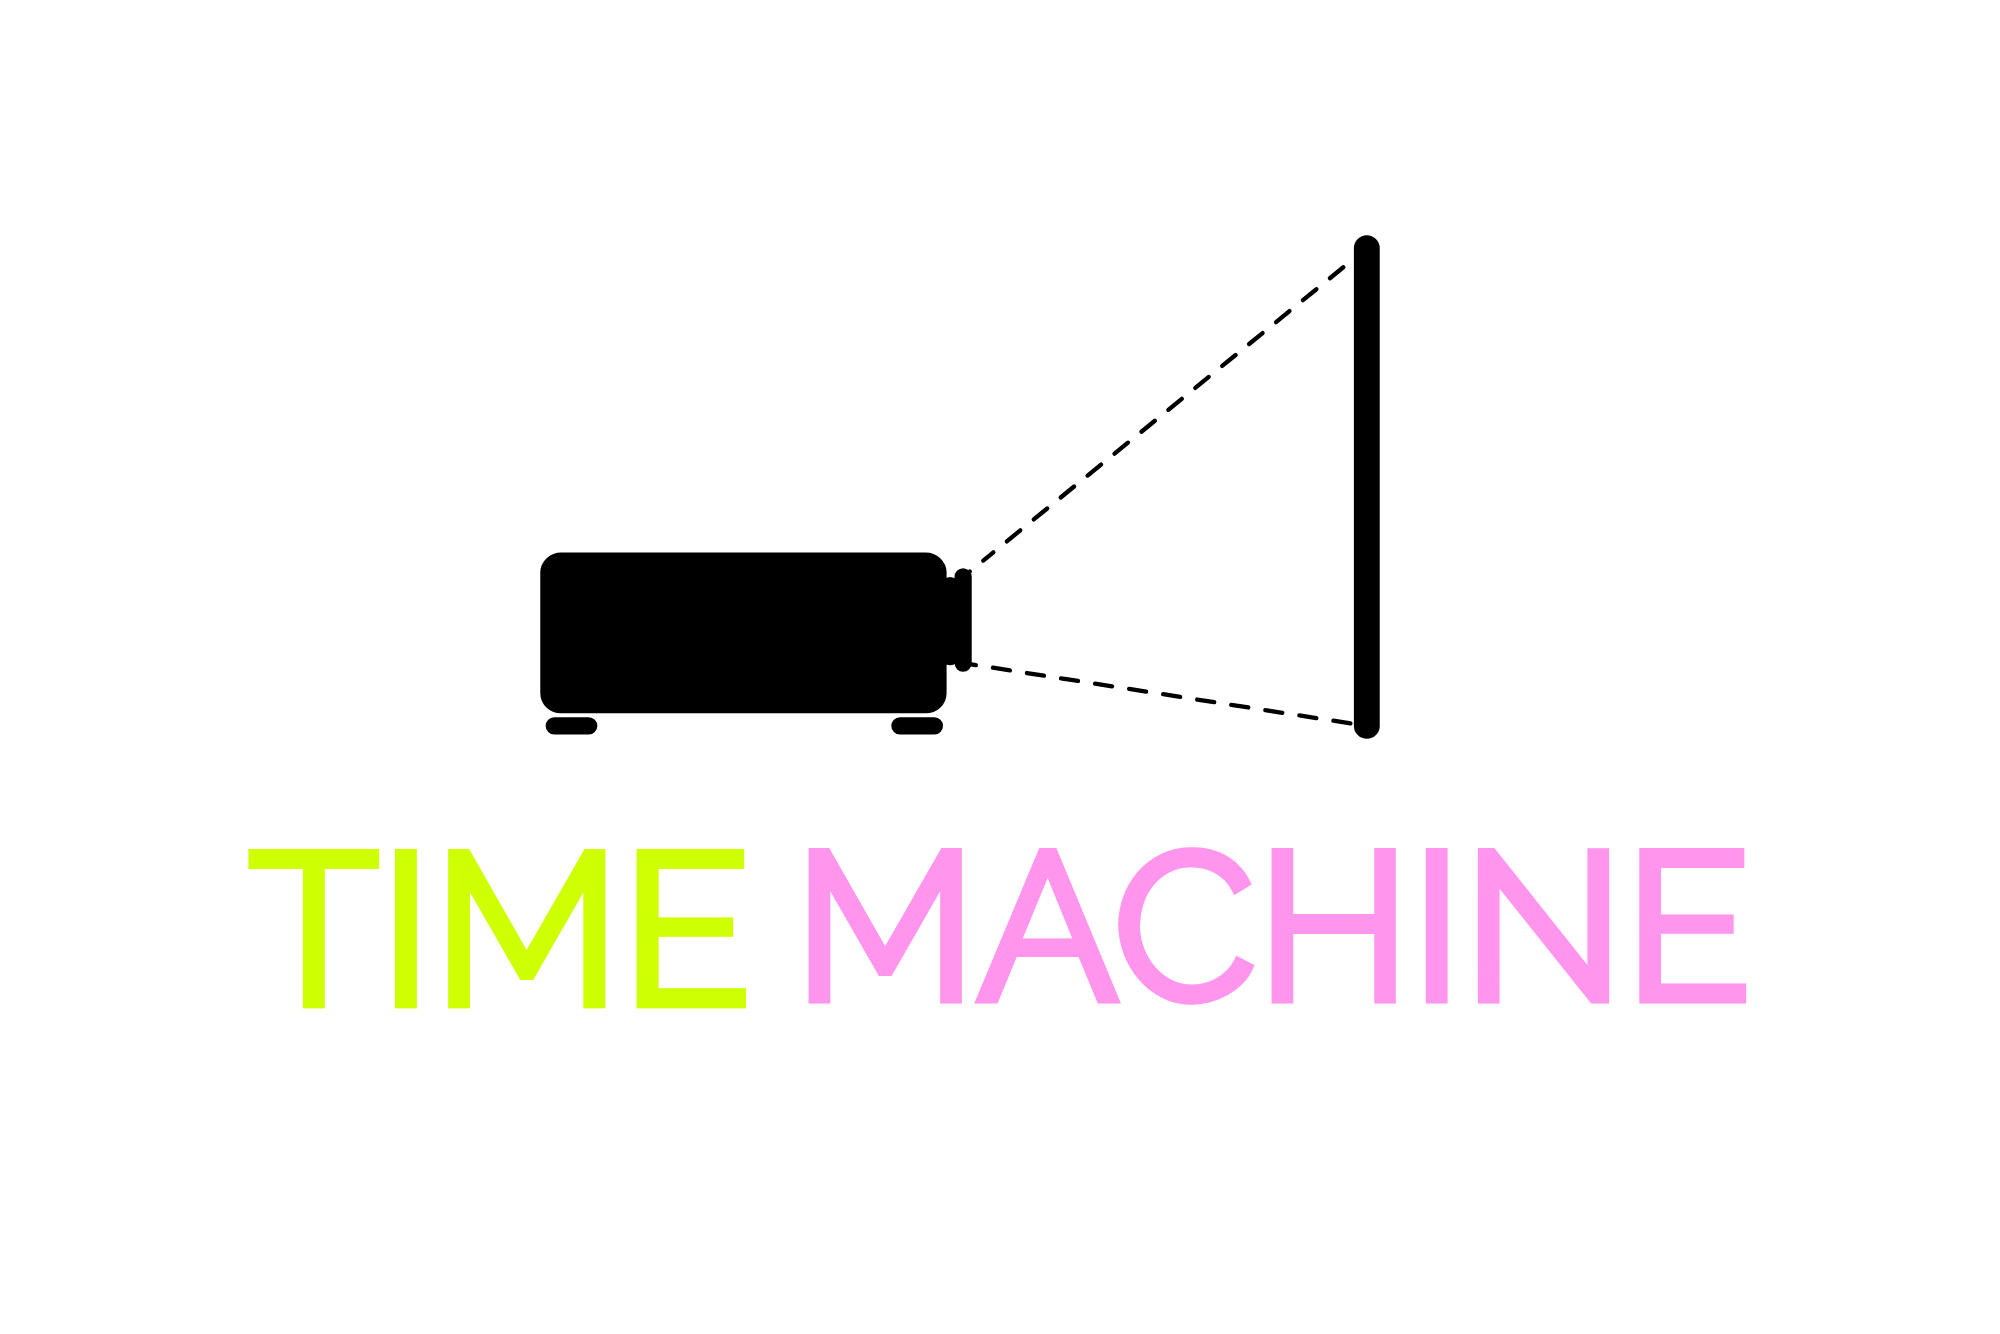 TIME MACHINE (Copy)